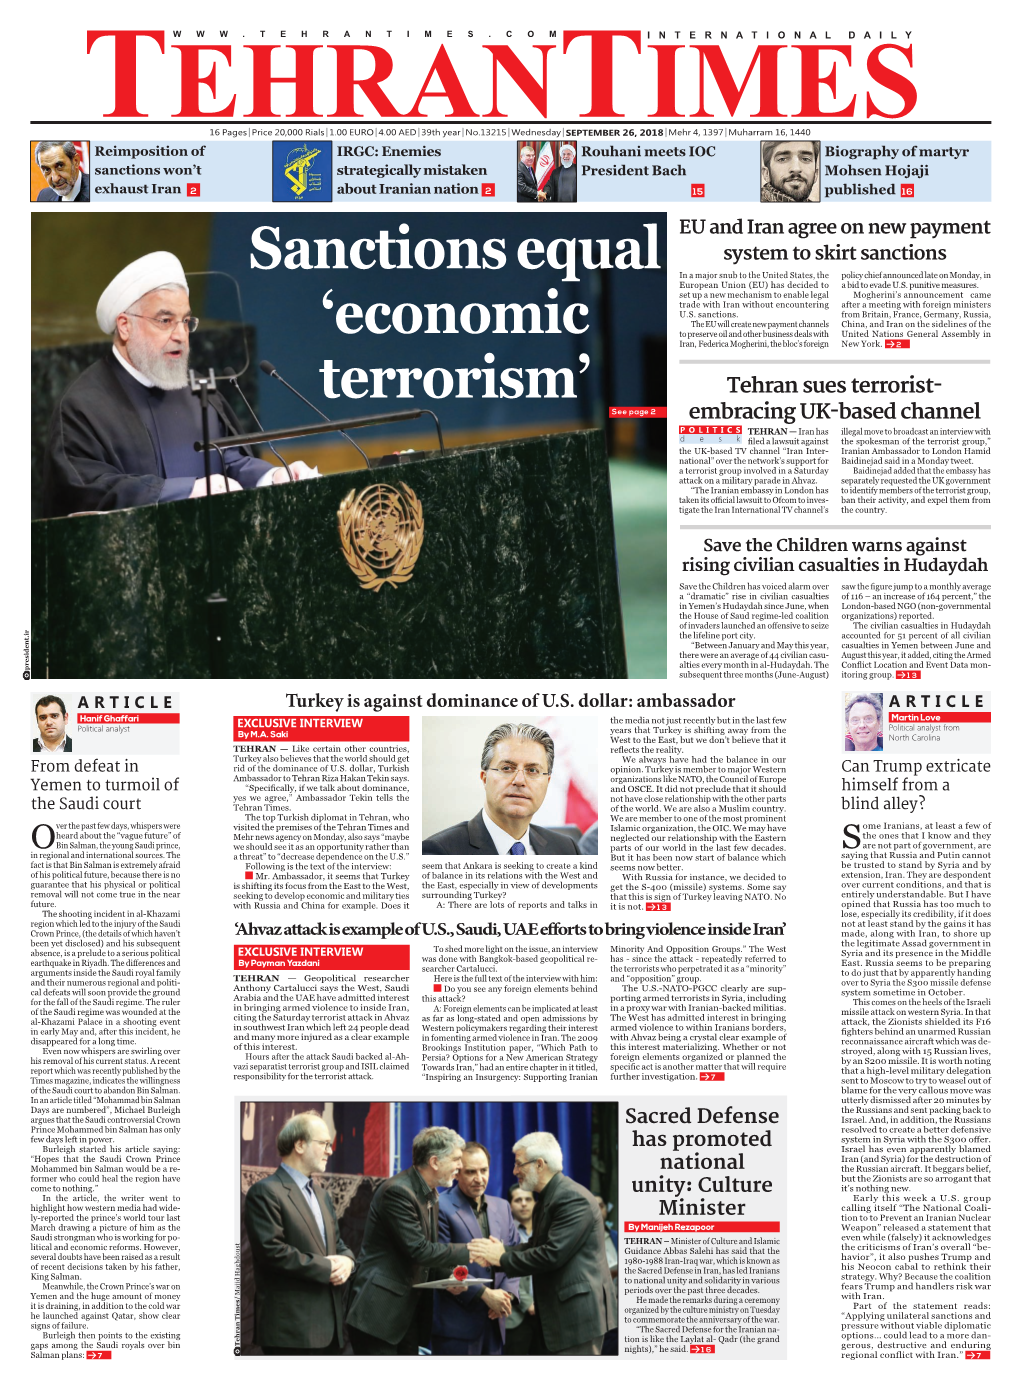 Sanctions Equal 'Economic Terrorism'